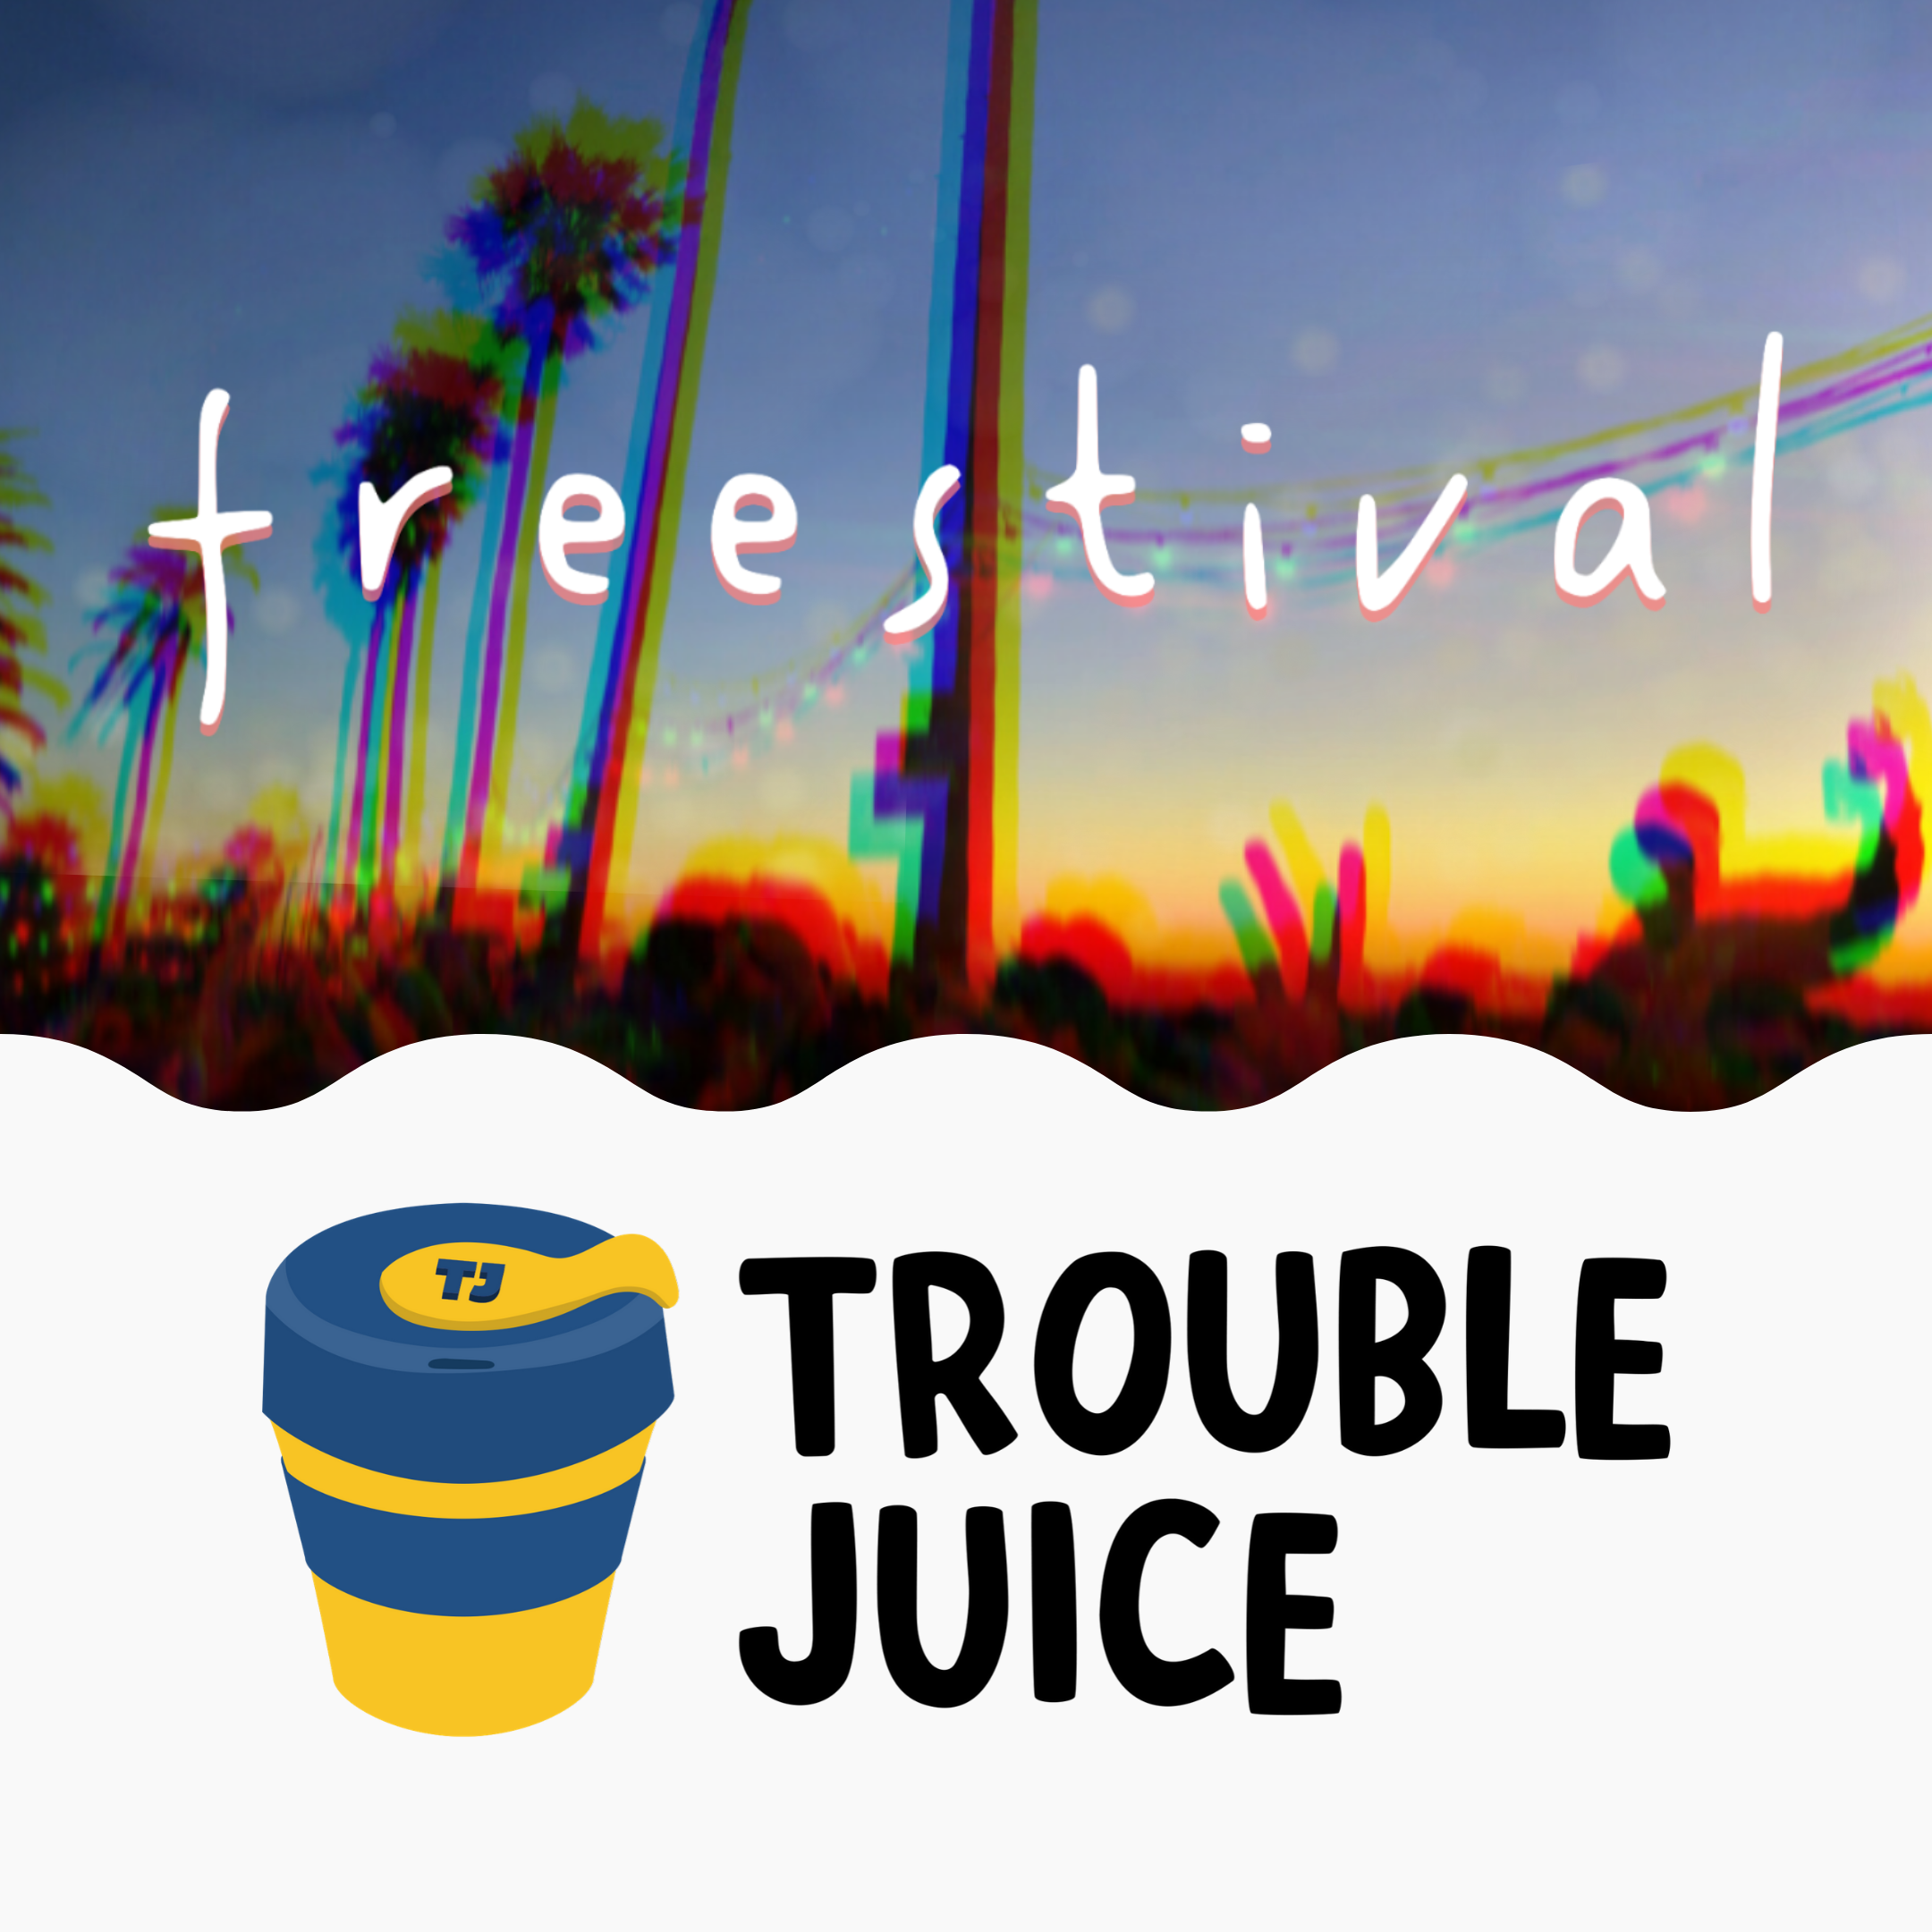 James - Trouble Juice | freestival